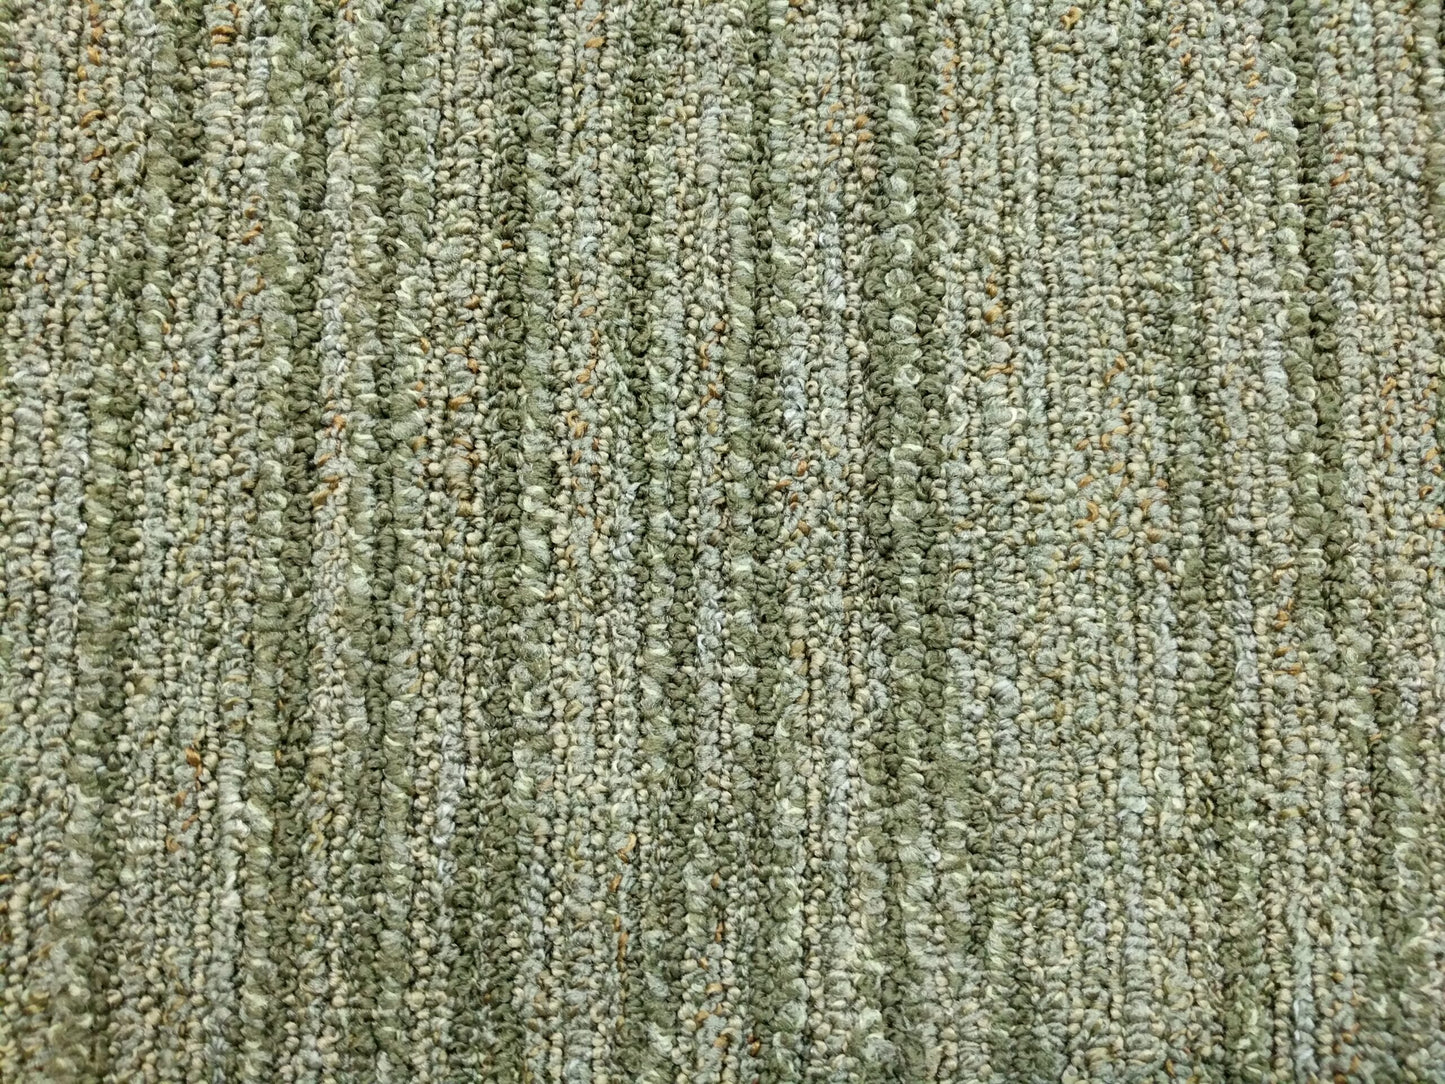 Shaw TI 00301 GREEN Carpet Tile. 48sq.ft./Case